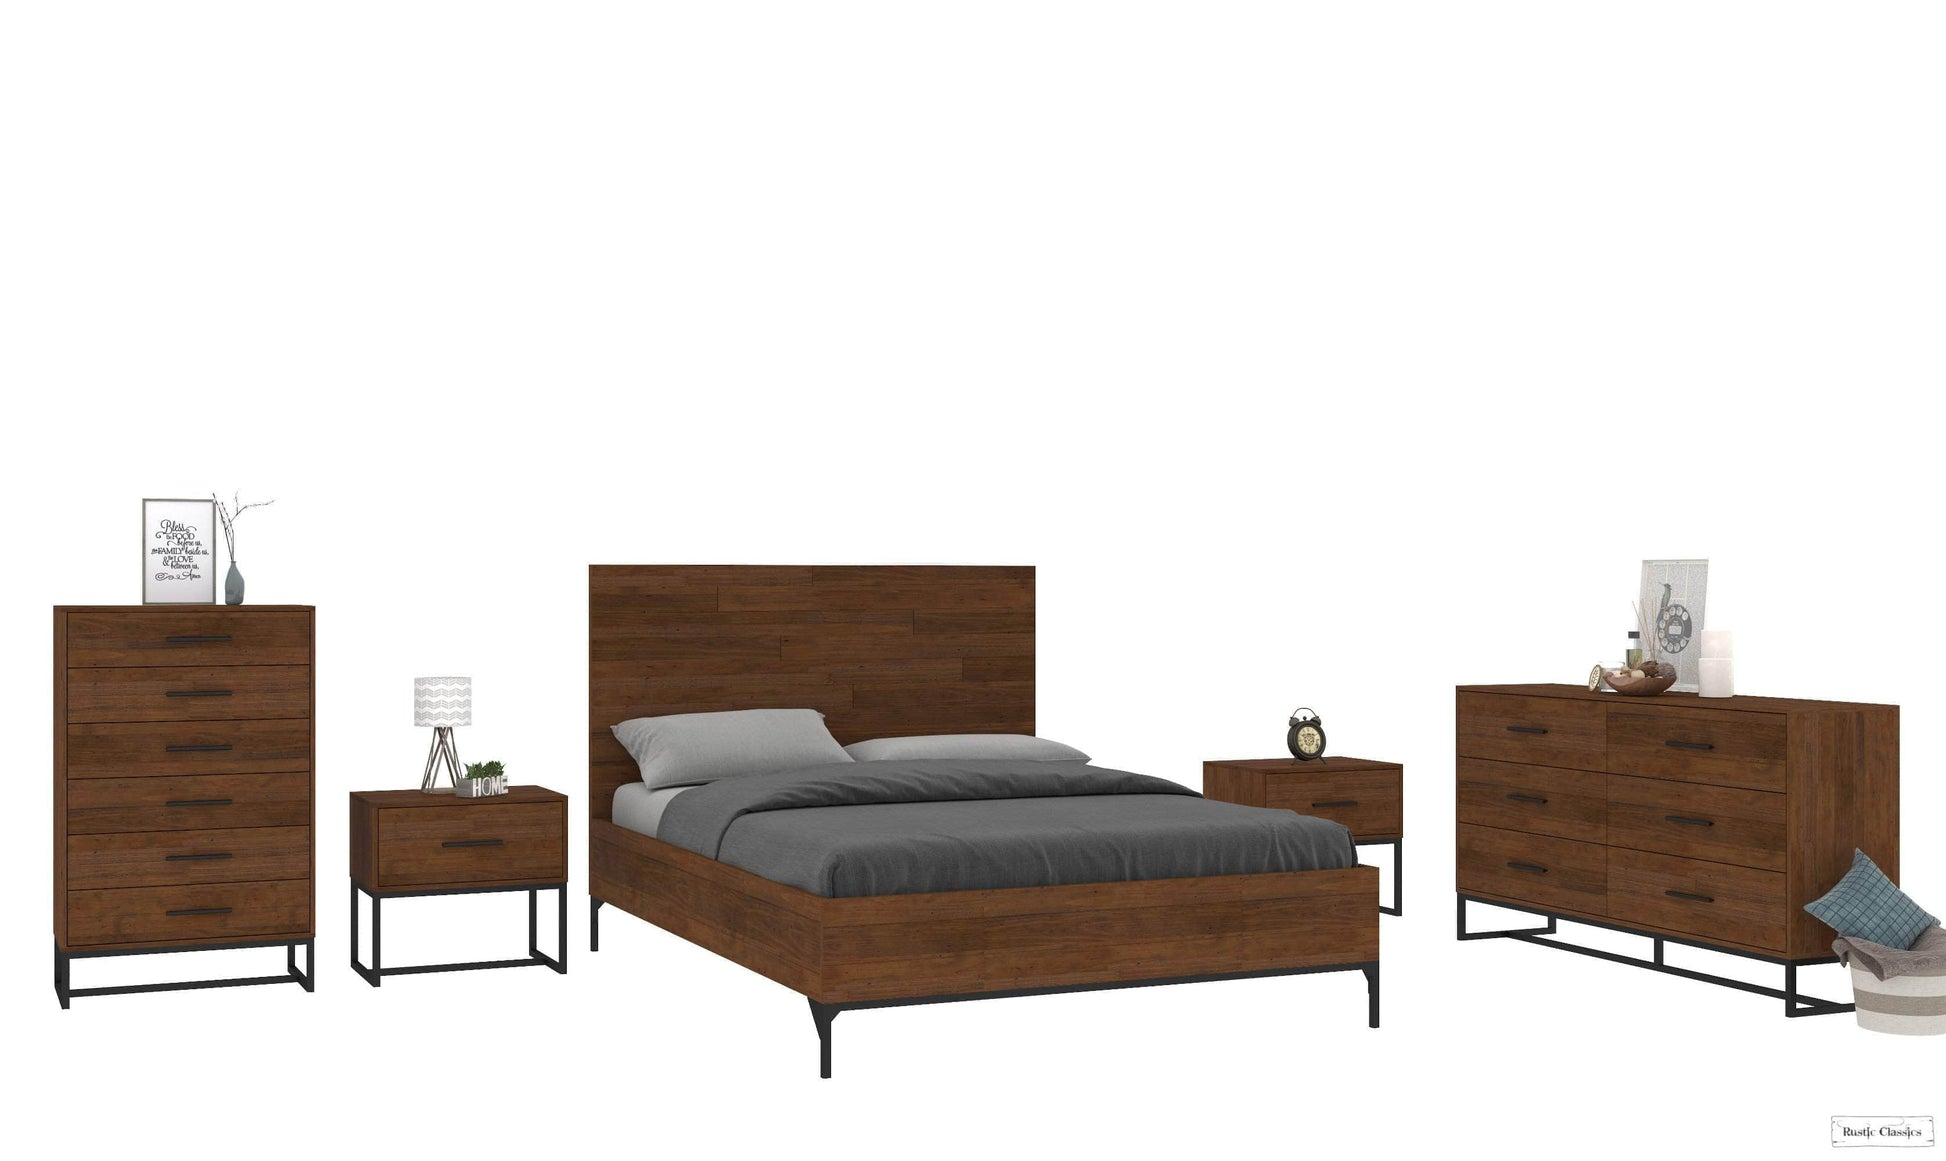 Rustic Classics Bedroom Set Queen Blackcomb 5 Piece Reclaimed Wood and Metal Platform Bedroom Furniture Set in Coffee Bean – Available in 2 Sizes